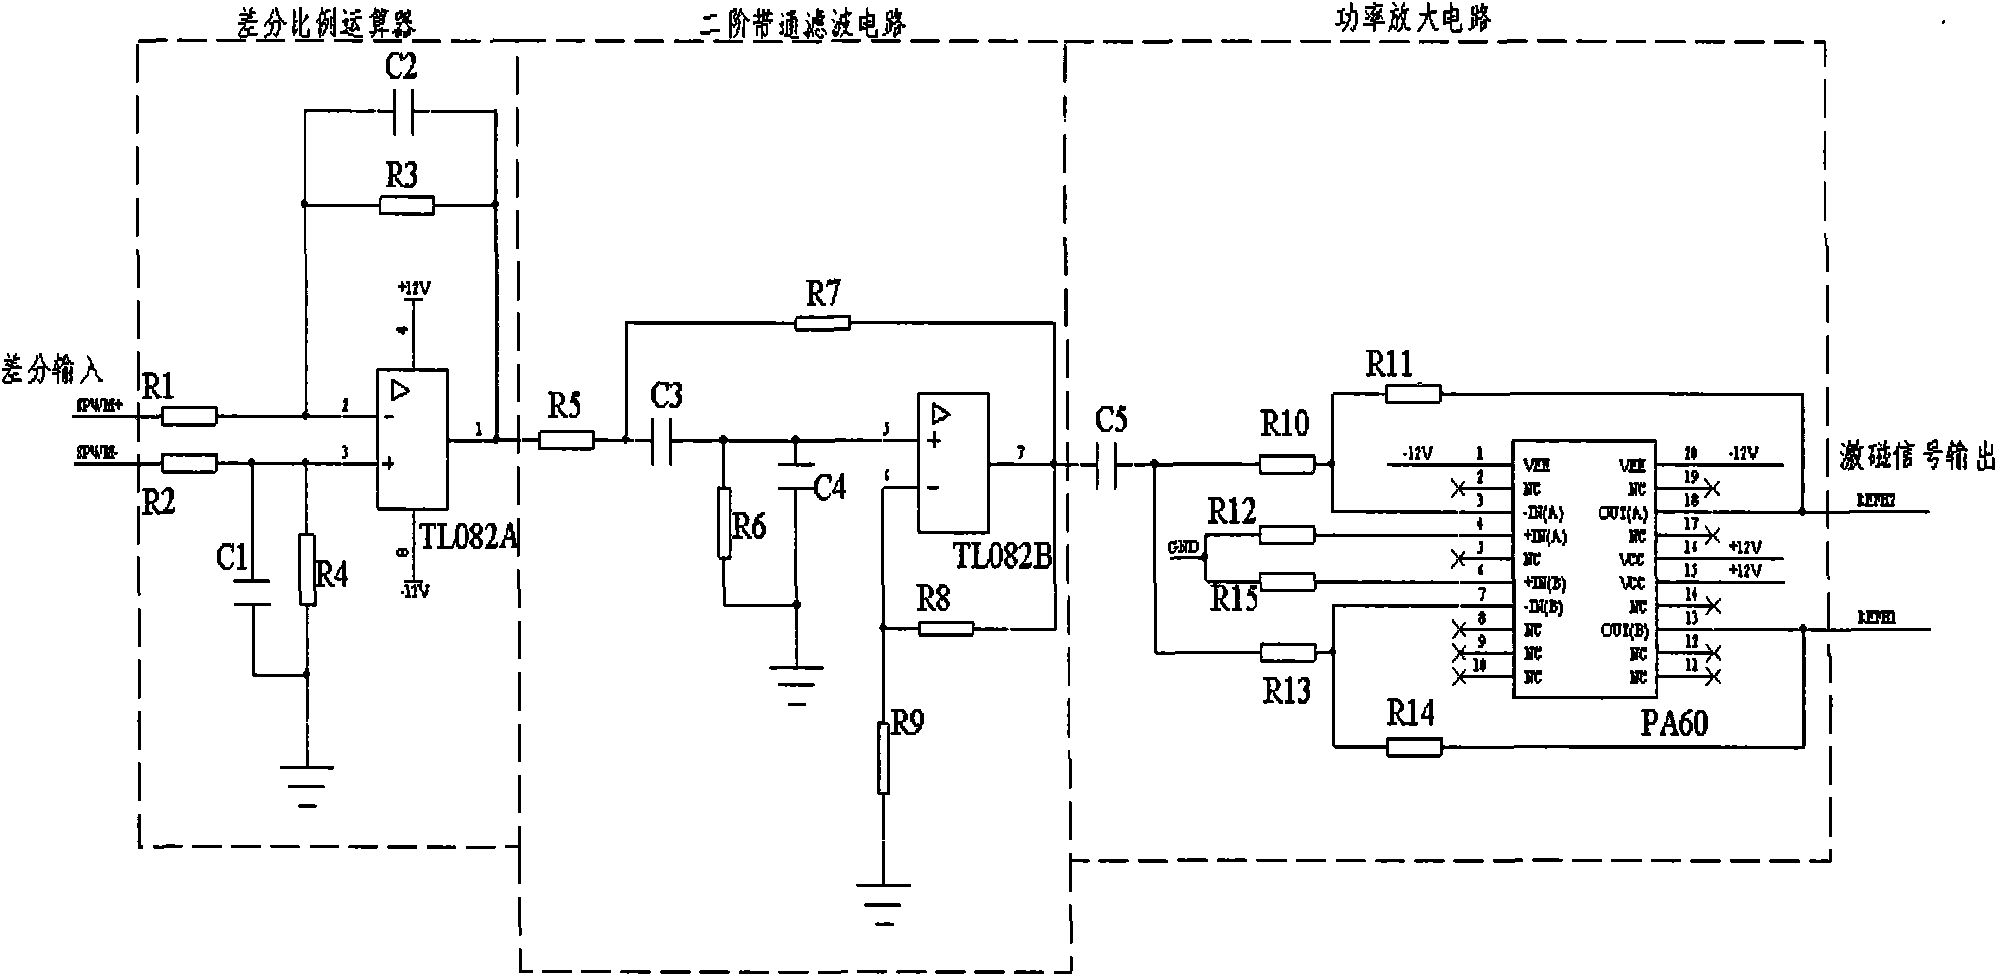 Rotating transformer exciting circuit based on sinusoidal pulse width modulation (SPWM)